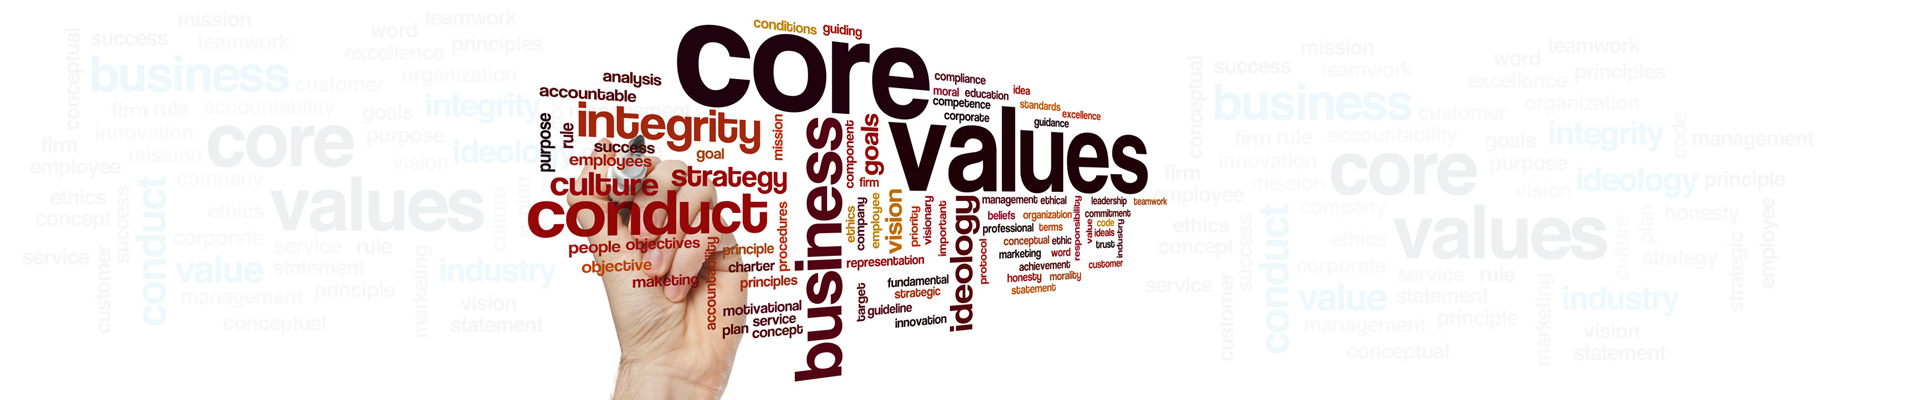 Intec Americas Core Values